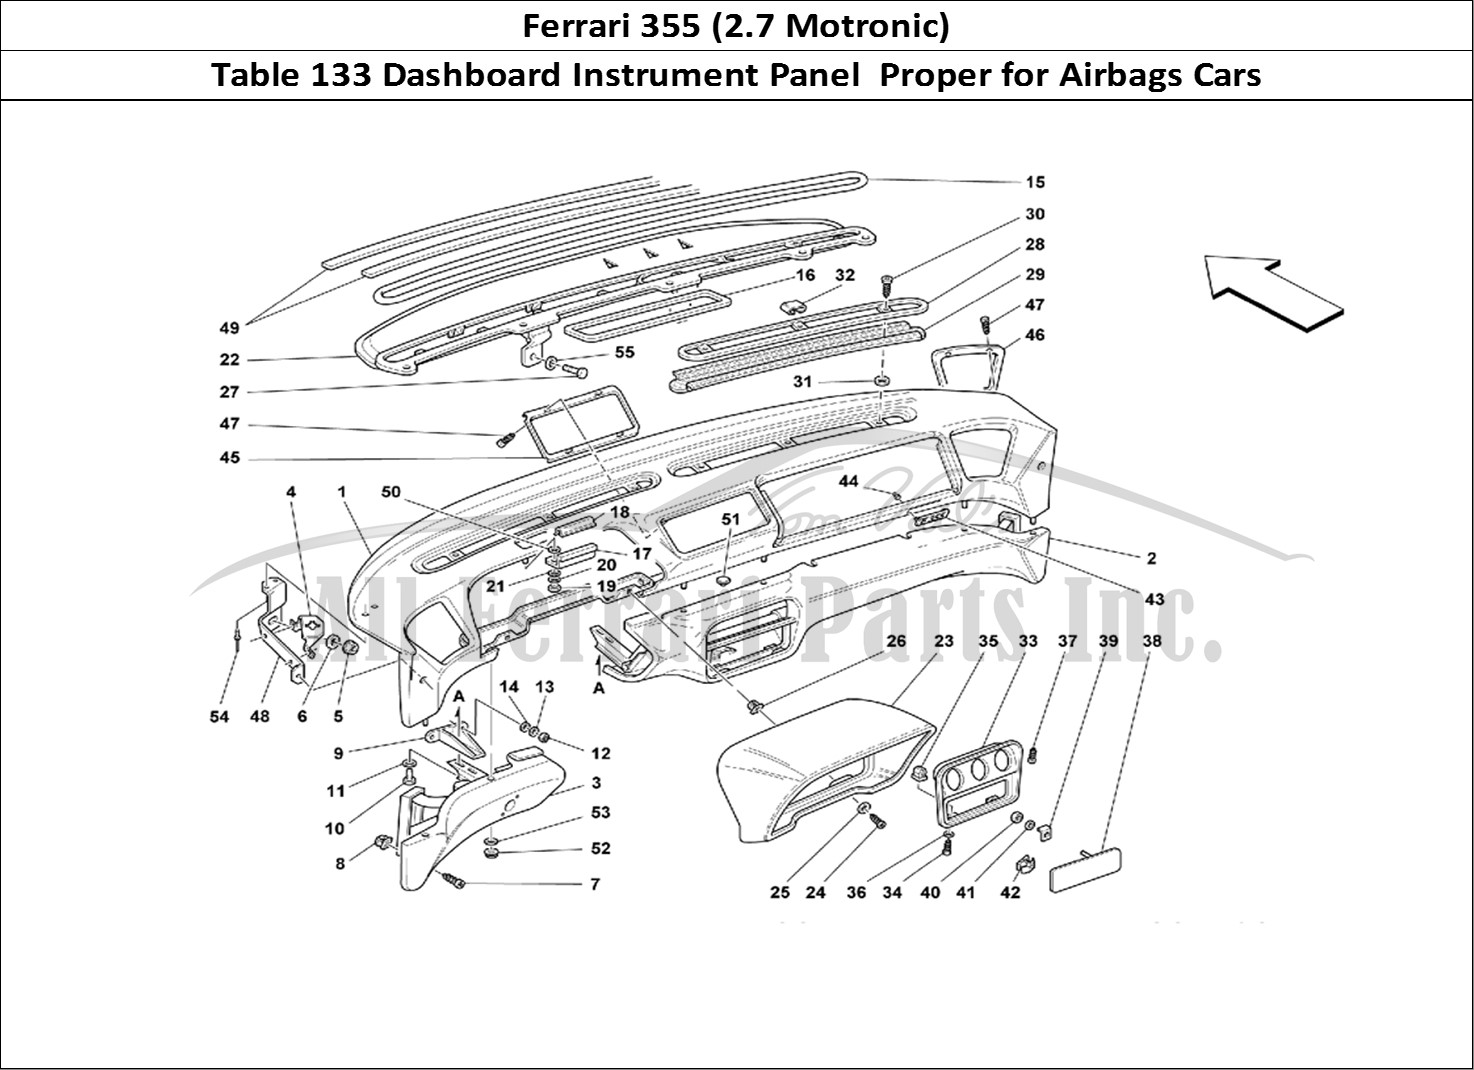 Ferrari Parts Ferrari 355 (2.7 Motronic) Page 133 Dashboard -Valid for Air-